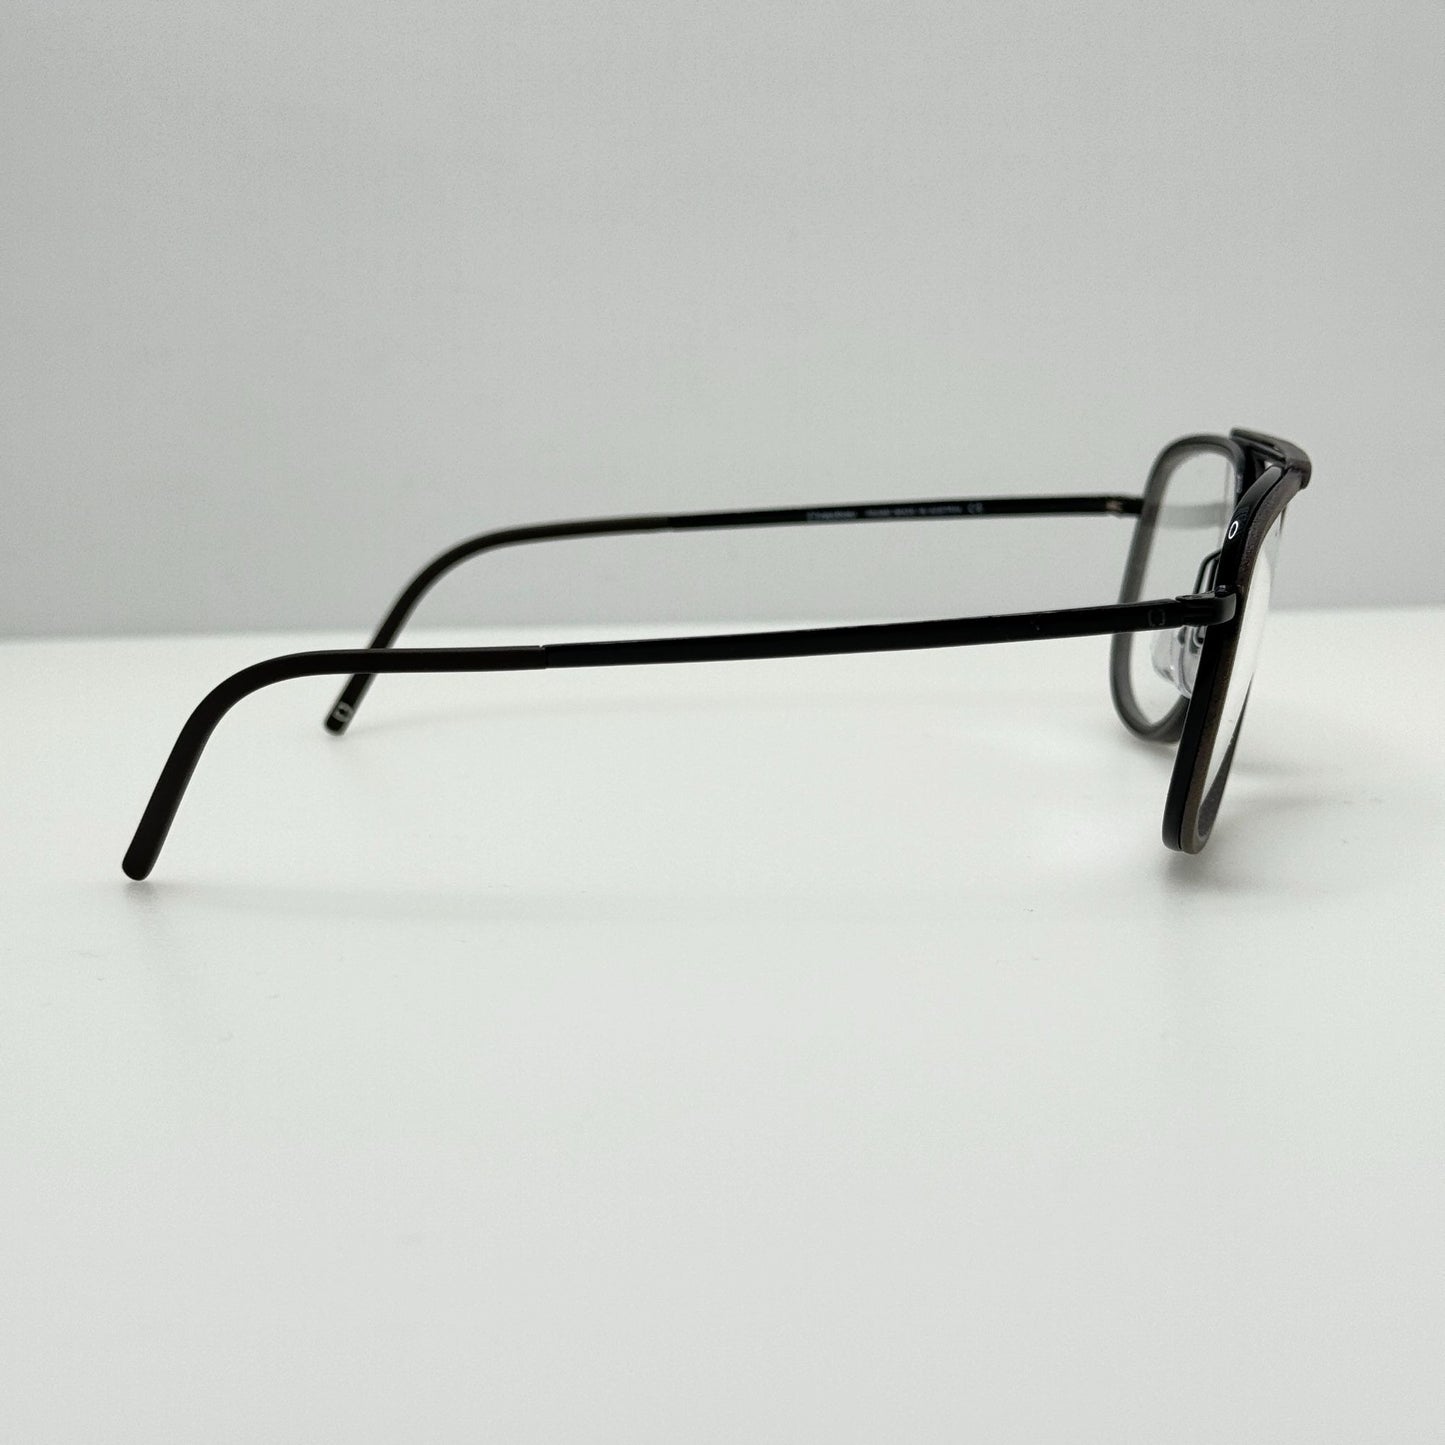 Neubau Eyeglasses Eyeglasses Frame Erwin 3D N11 T1049 75 6540 52-19-140 Austria